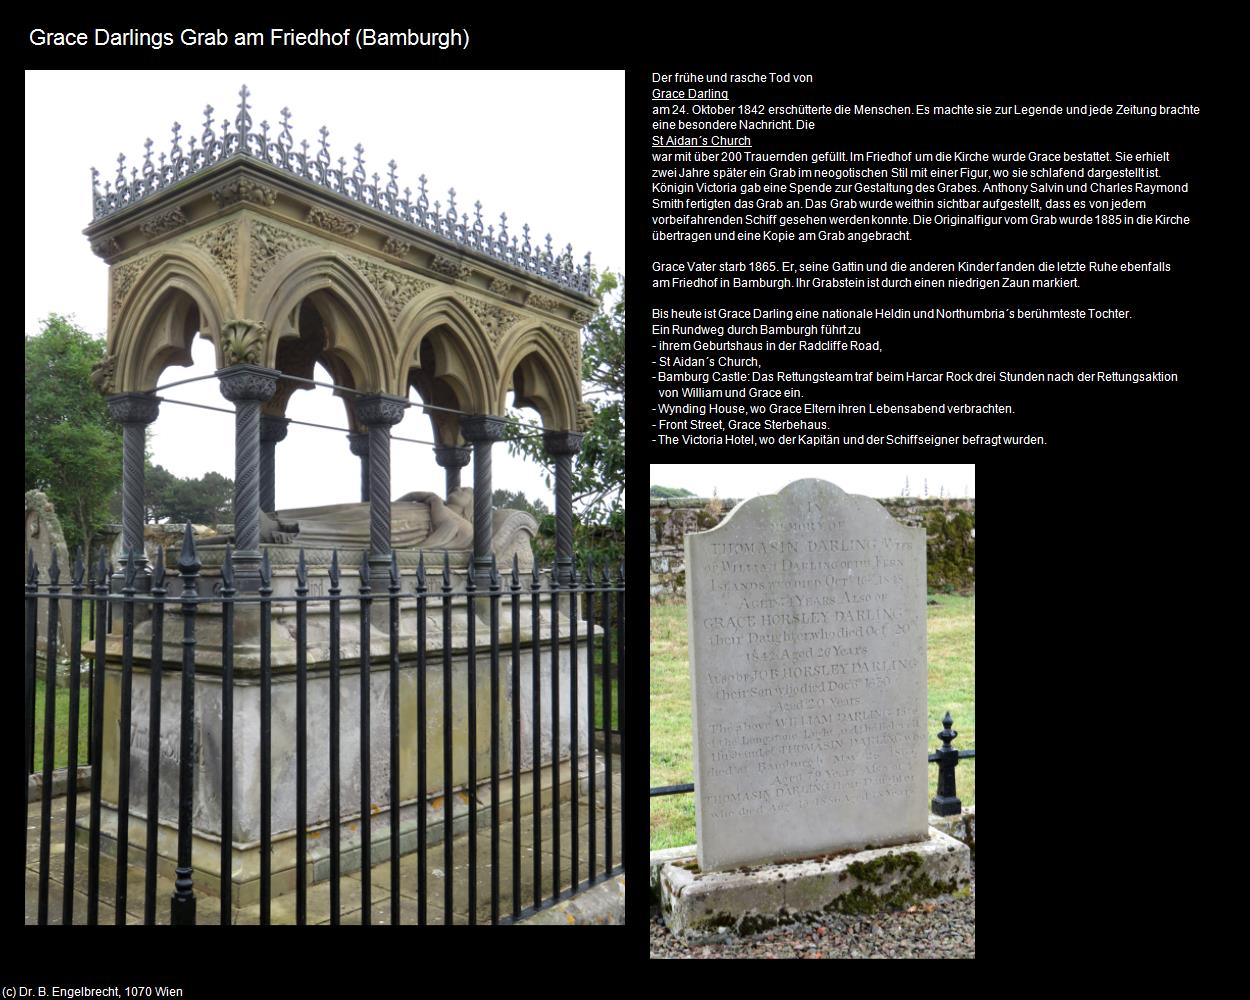 Grace Darlings Grab am Friedhof  (Bamburgh, England) in Kulturatlas-ENGLAND und WALES(c)B.Engelbrecht